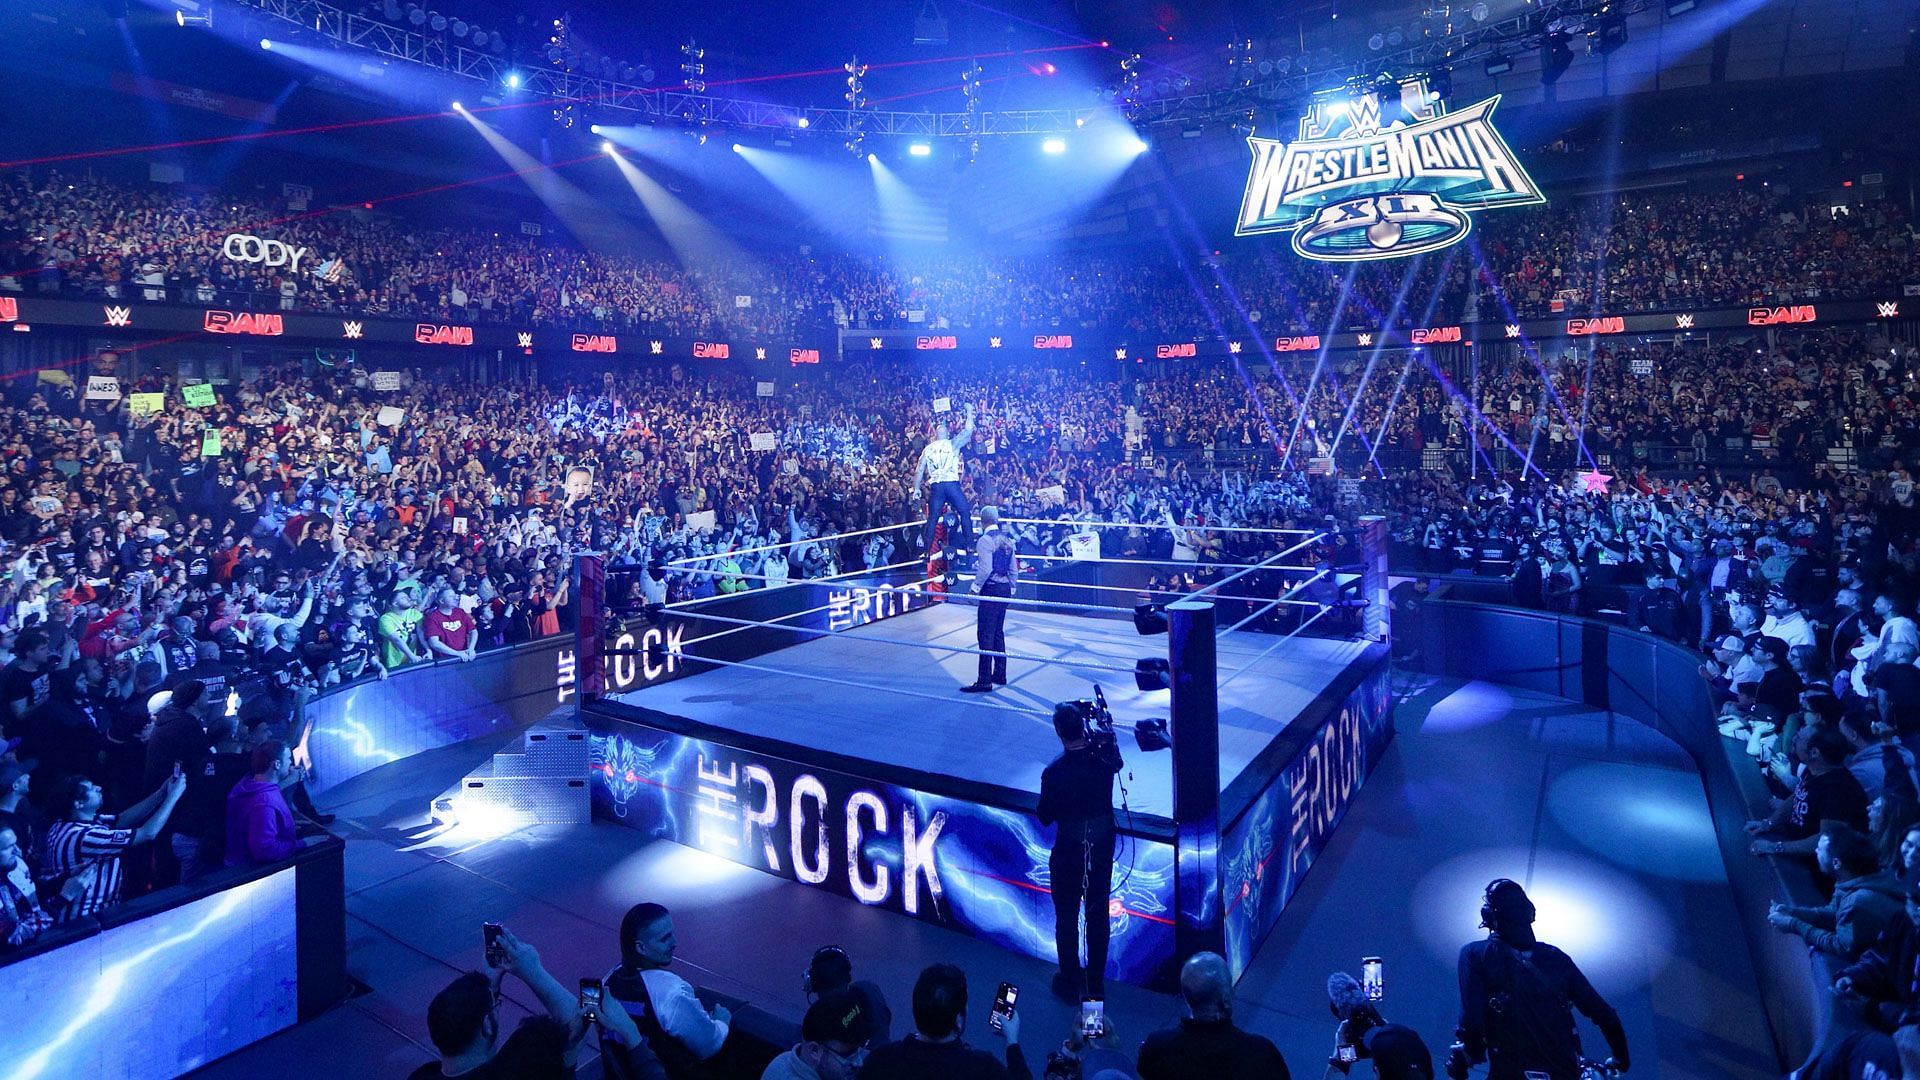 The Rock returns to WWE RAW ahead of WrestleMania XL